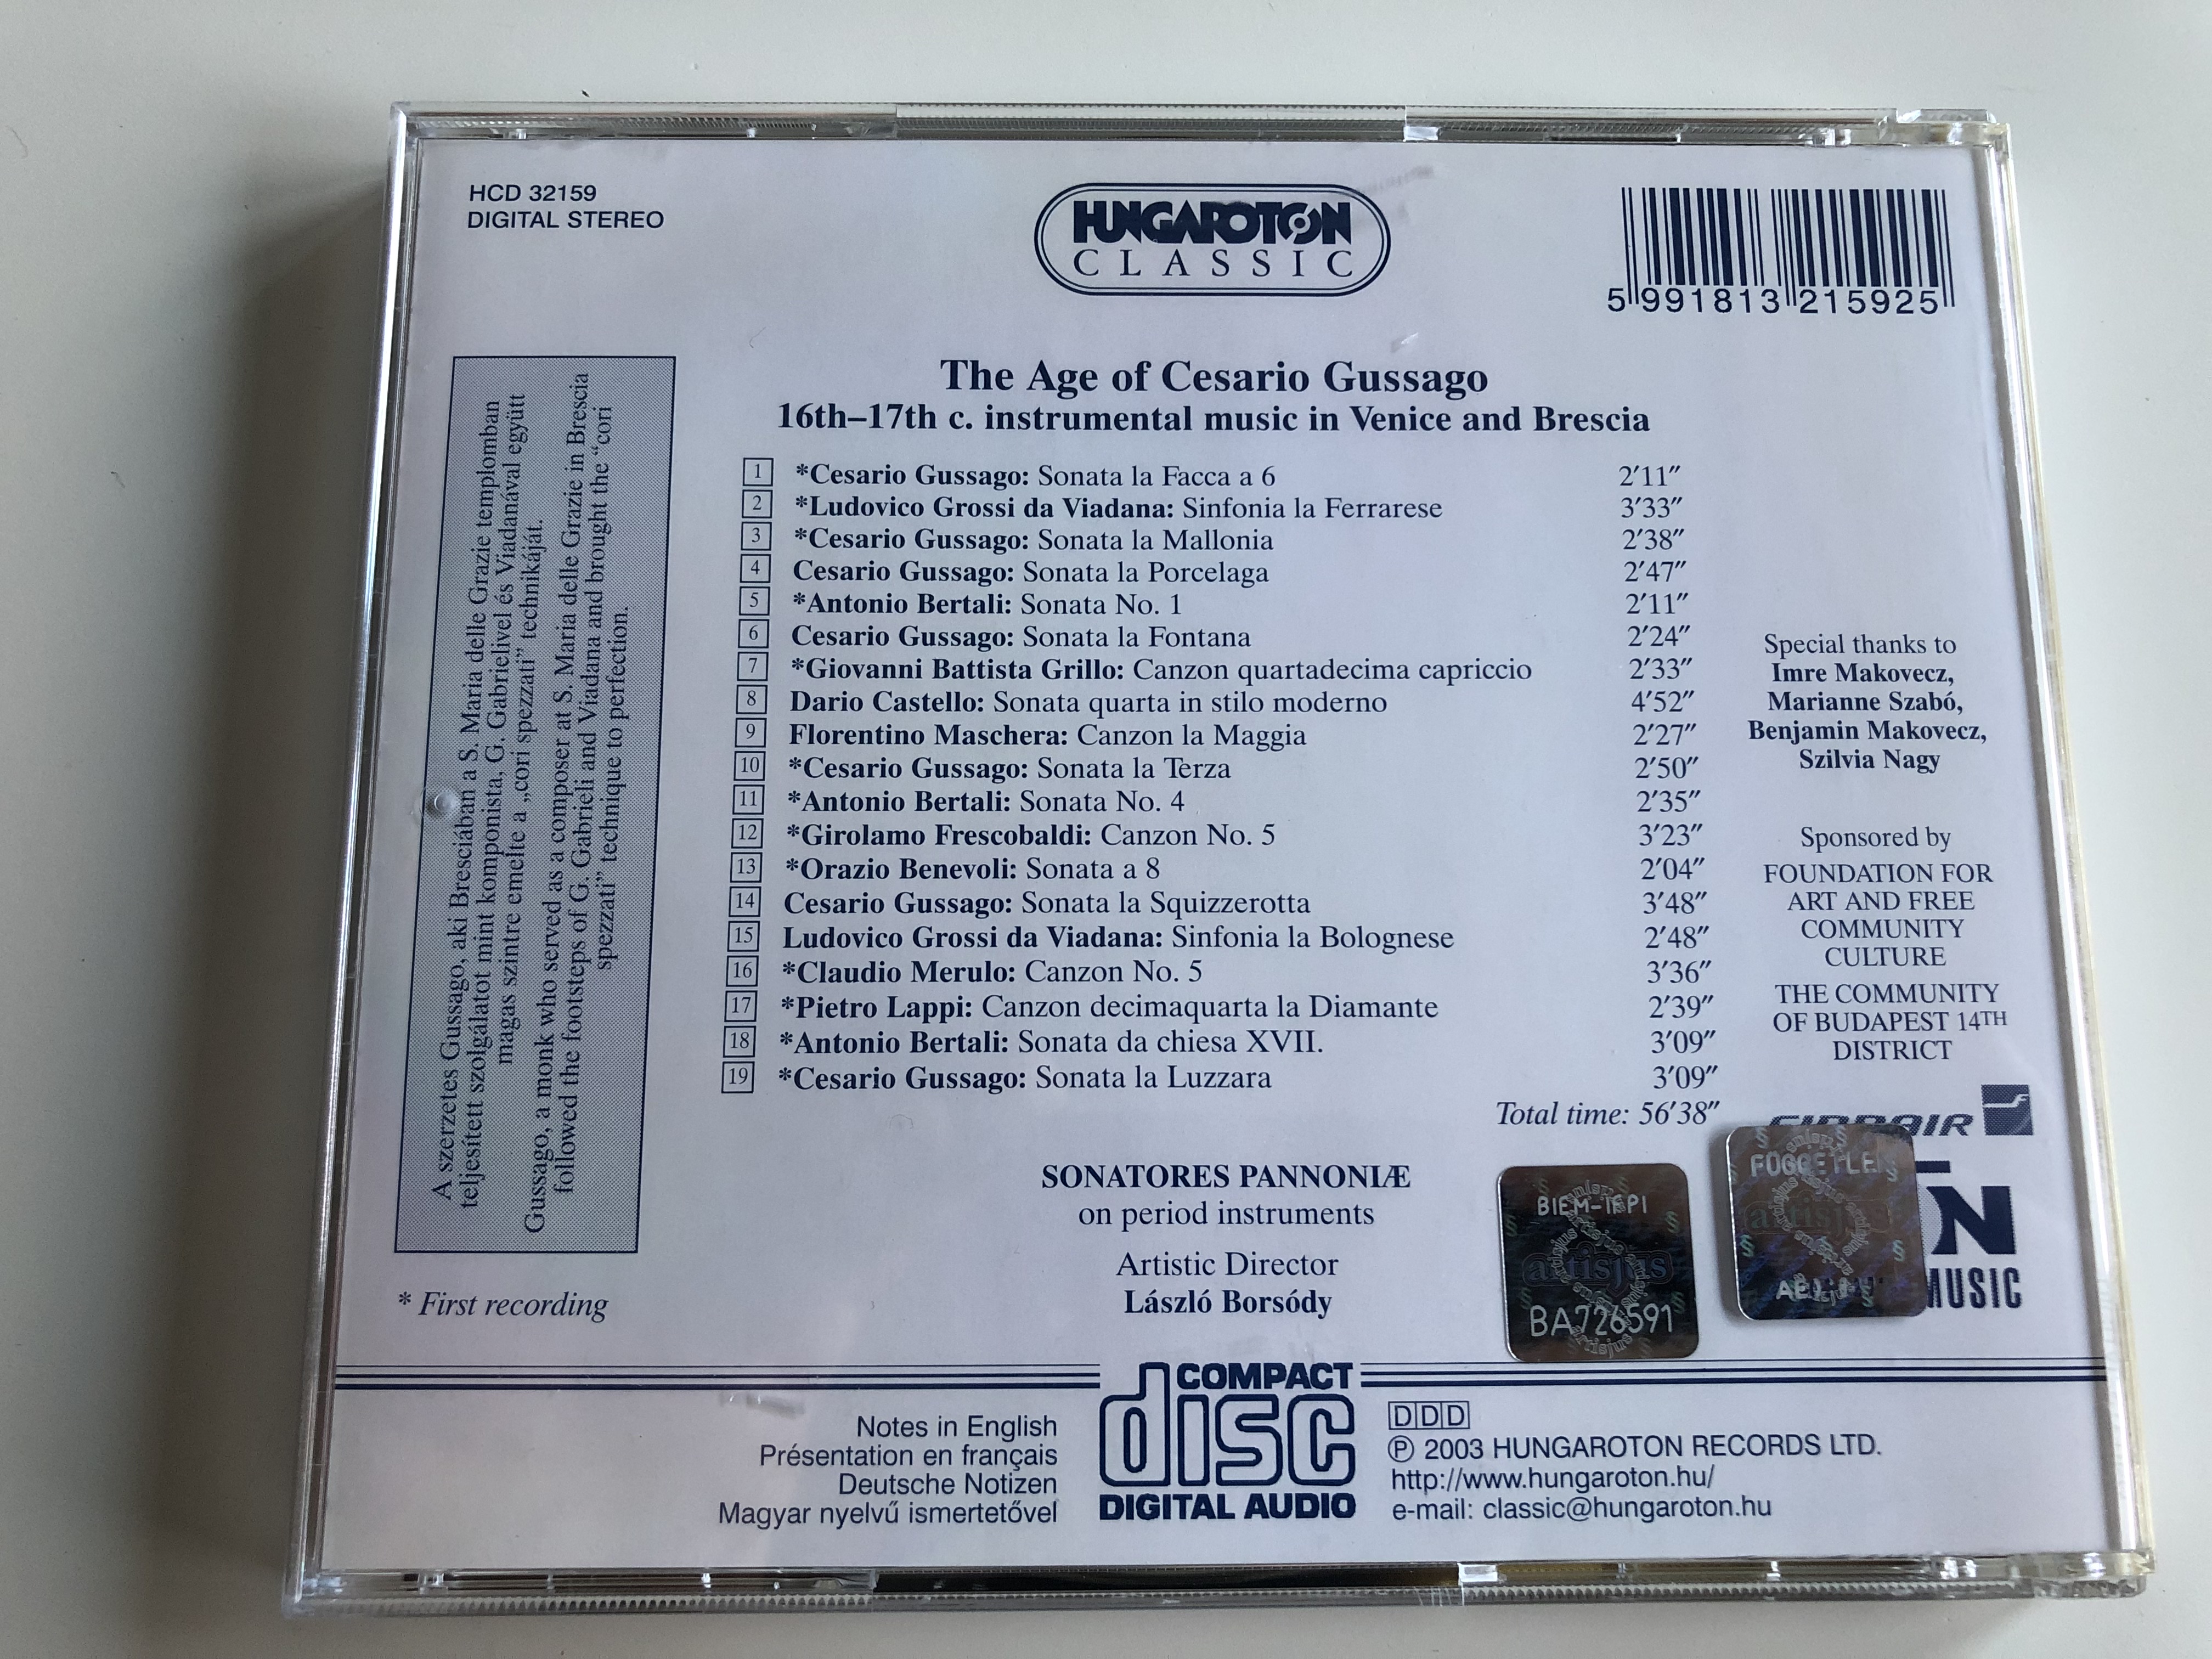 the-age-of-cesario-gussago-16th-17th-c.-instrumental-music-in-venice-and-brescia-sonatores-pannonie-hungaroton-classic-audio-cd-2003-stereo-hcd-32159-6-.jpg